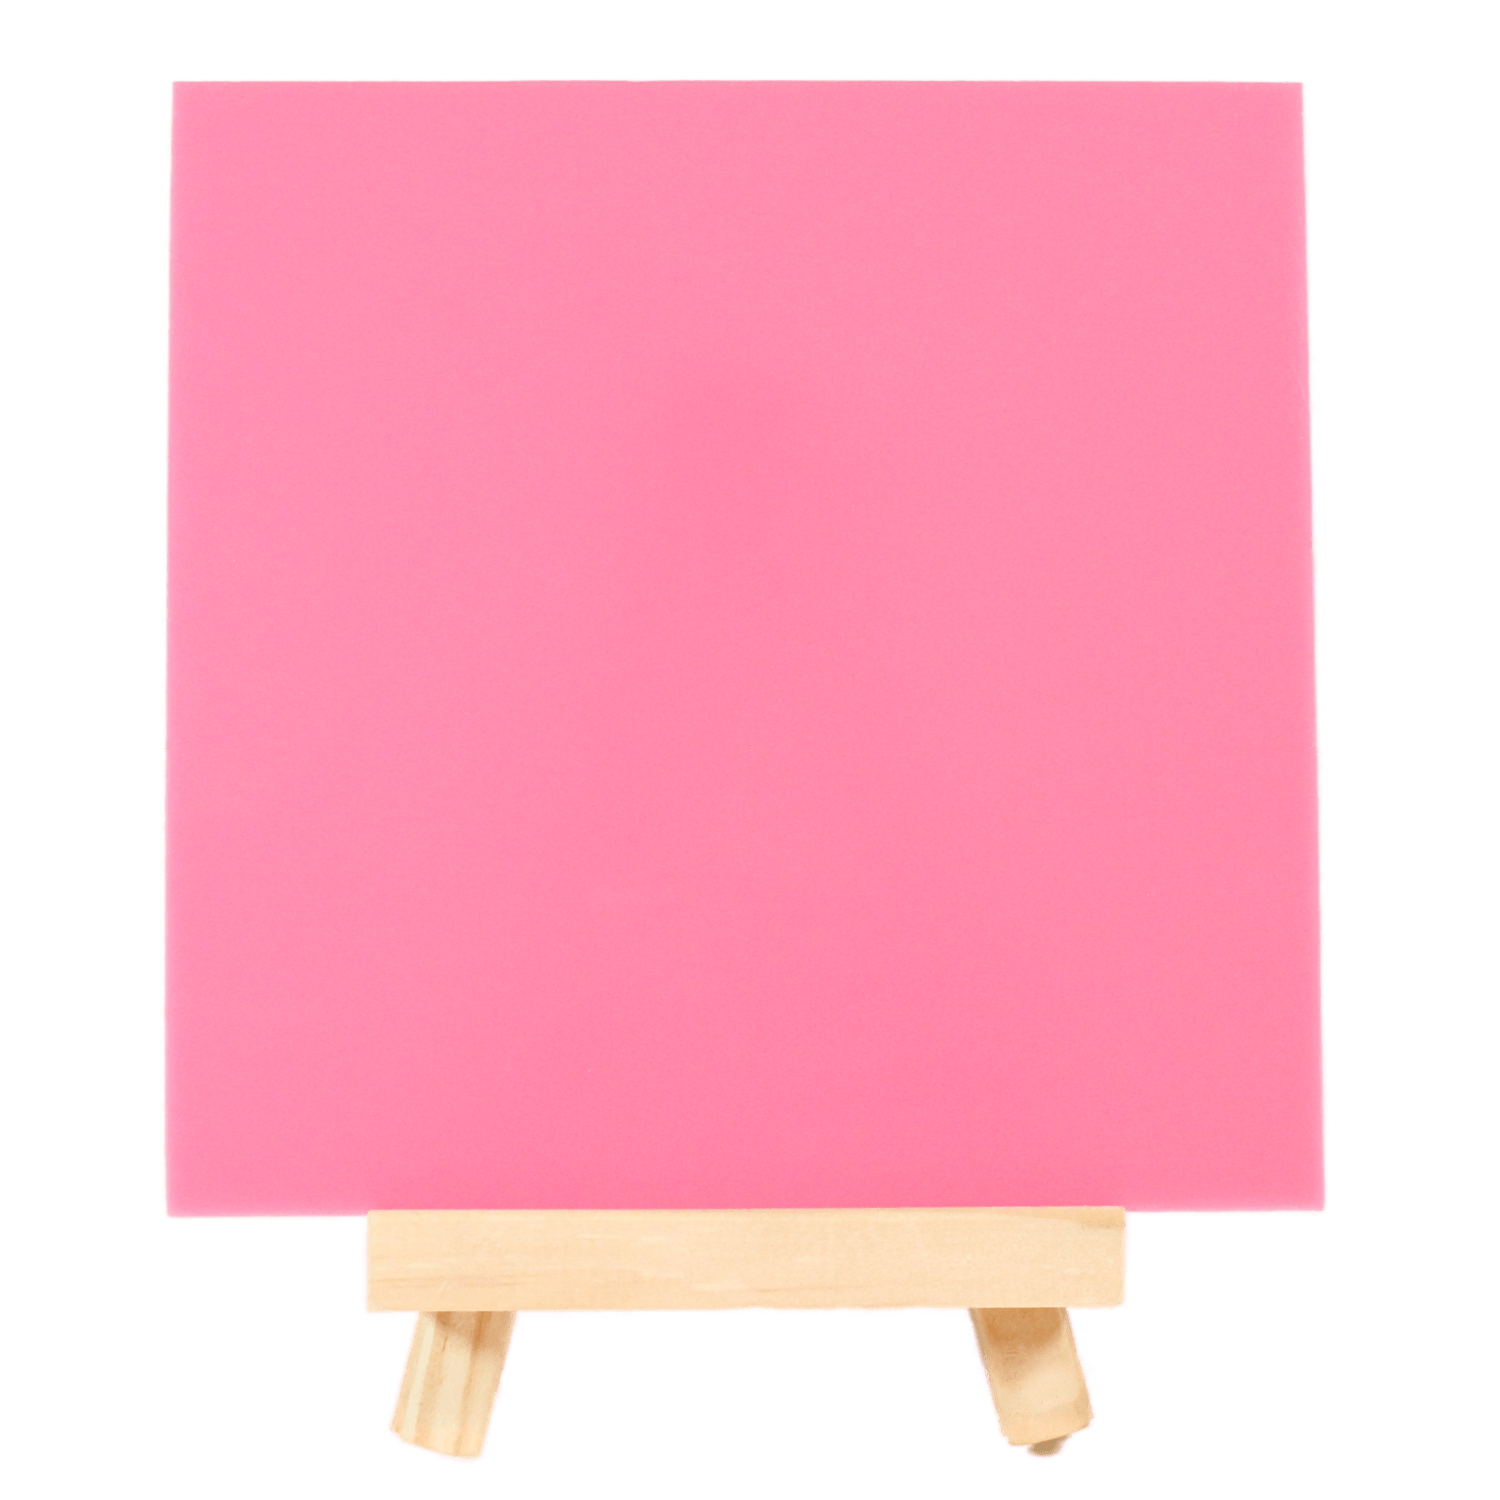 Pink Acrylic Sheet - High Quality